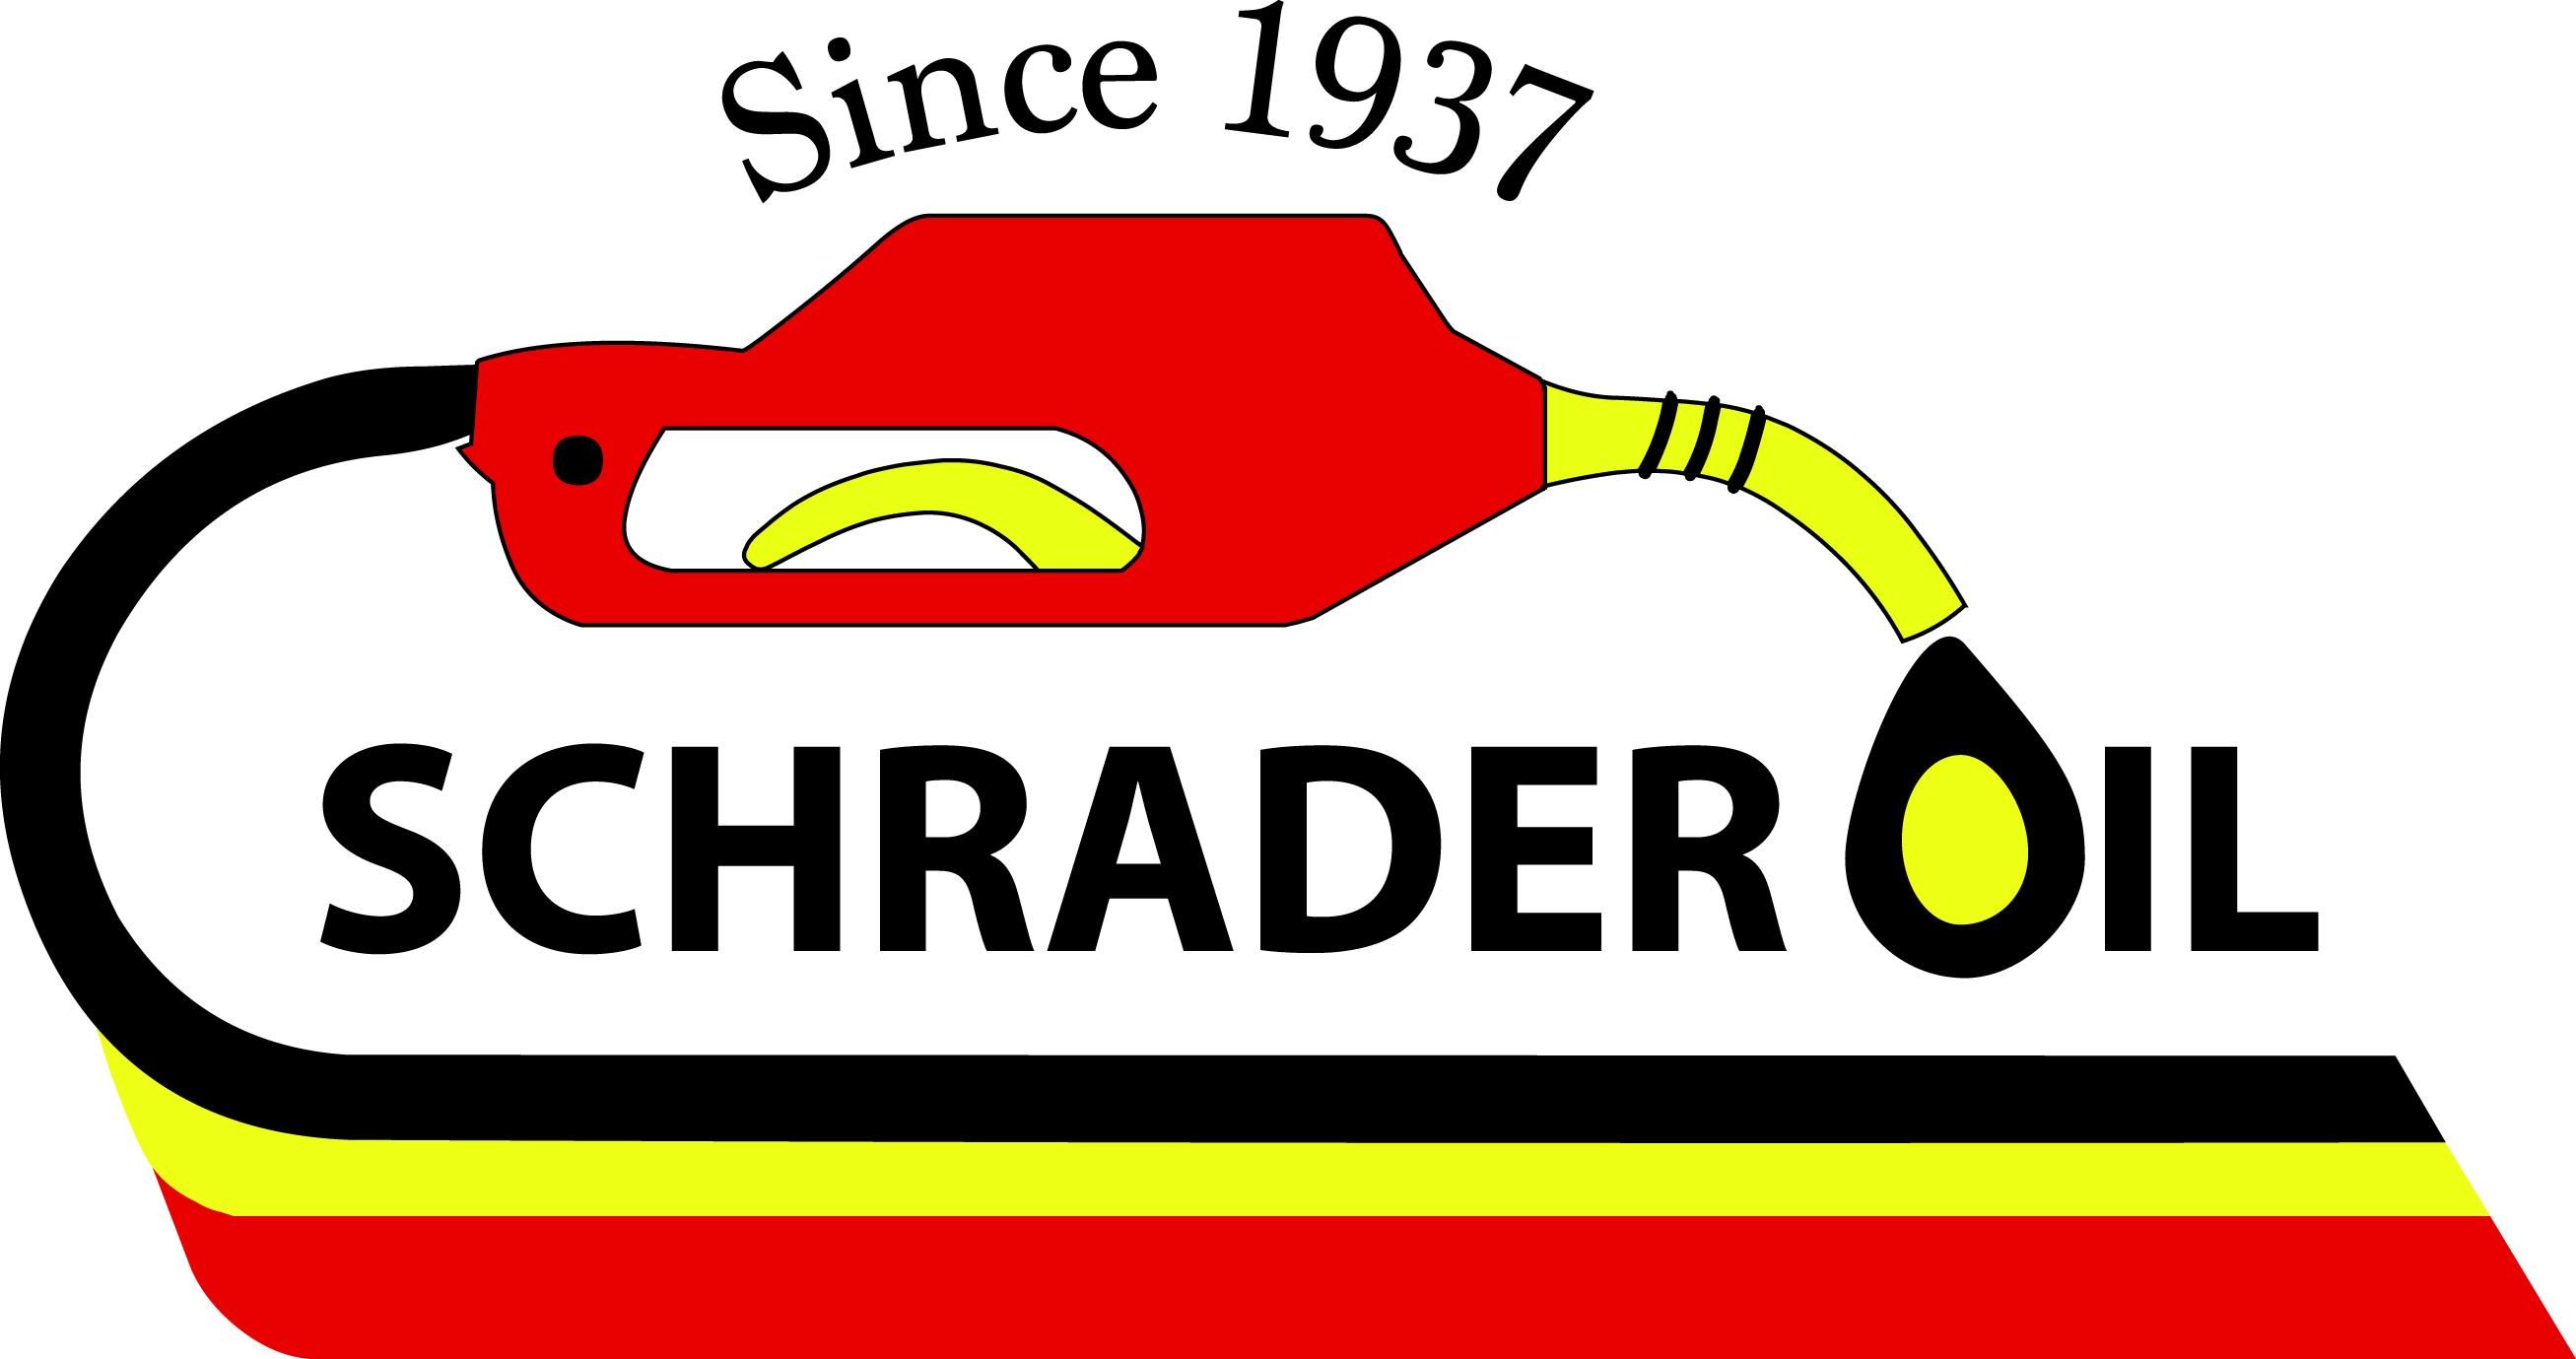 Schrader Oil Company.